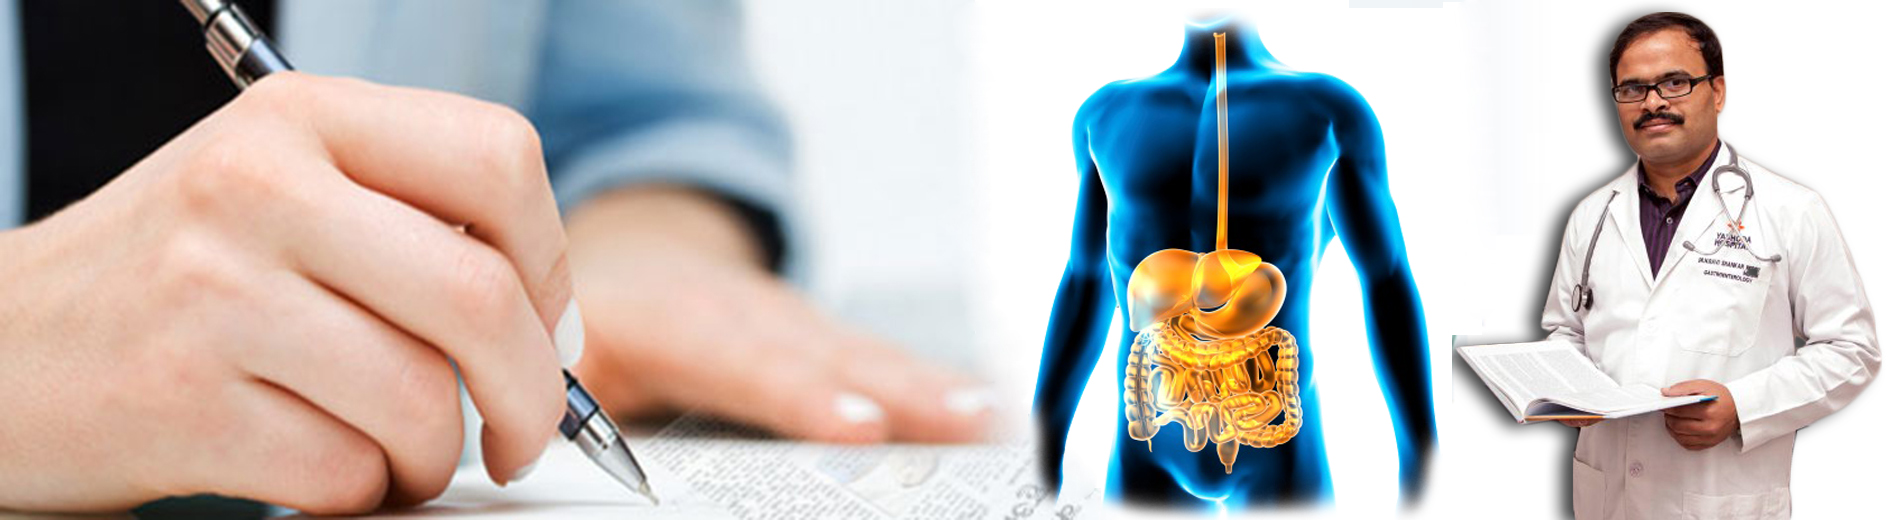 Gastroenterology | Medical Responsive Website Templates